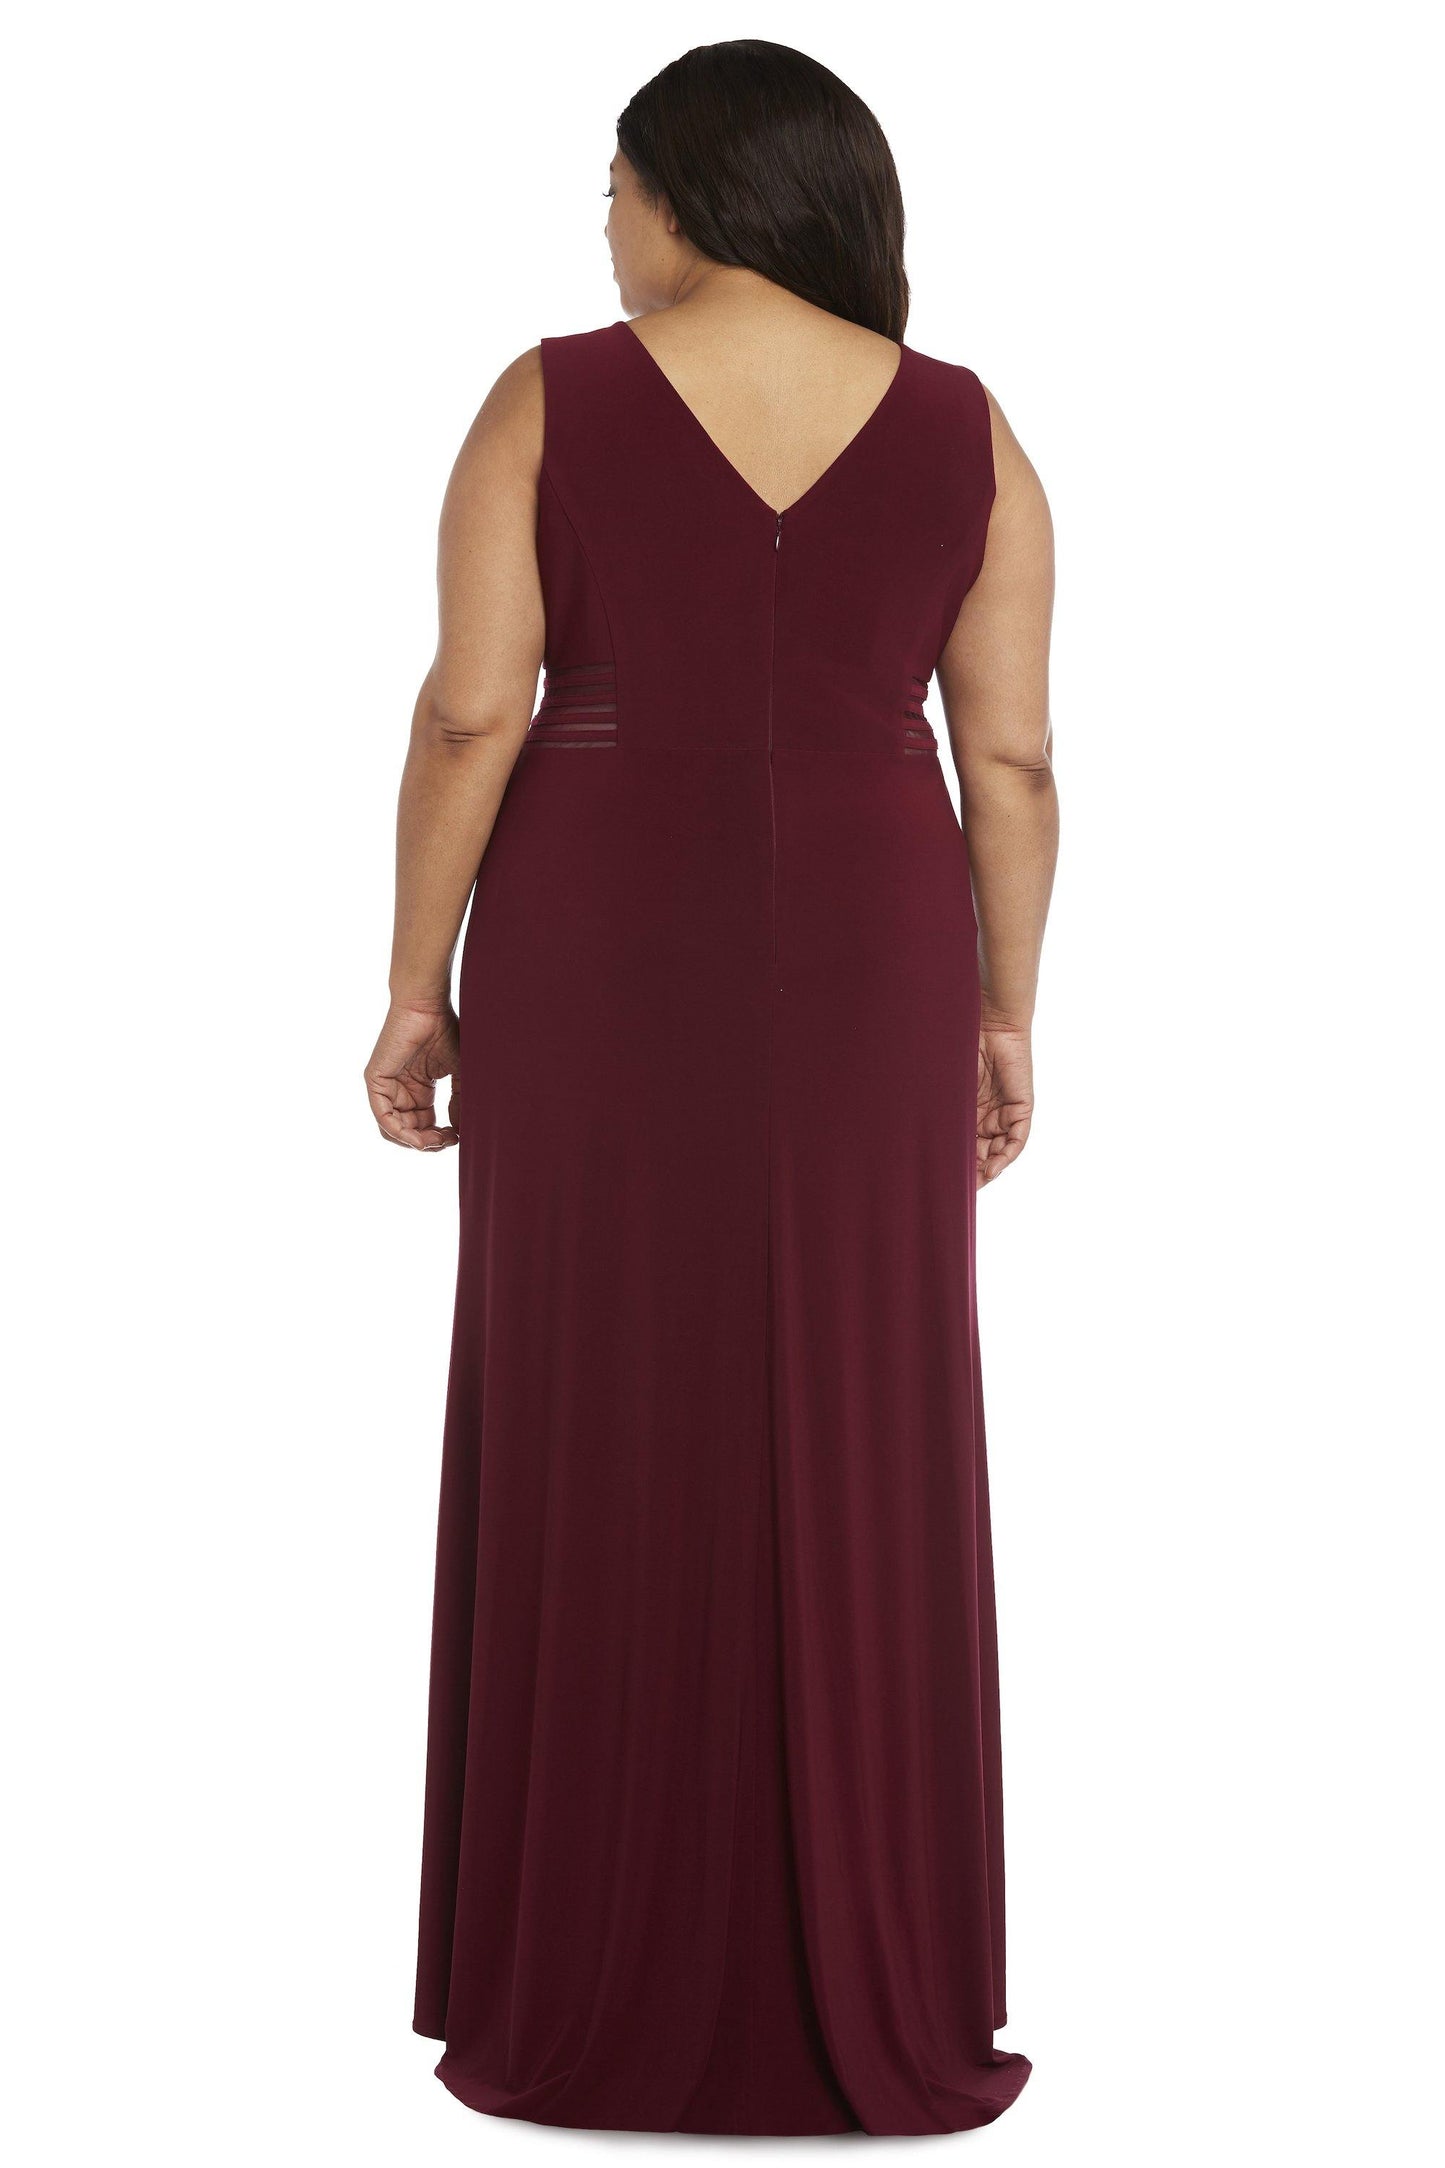 Morgan & Co Long Plus Size Formal Dress 12173WMM - The Dress Outlet